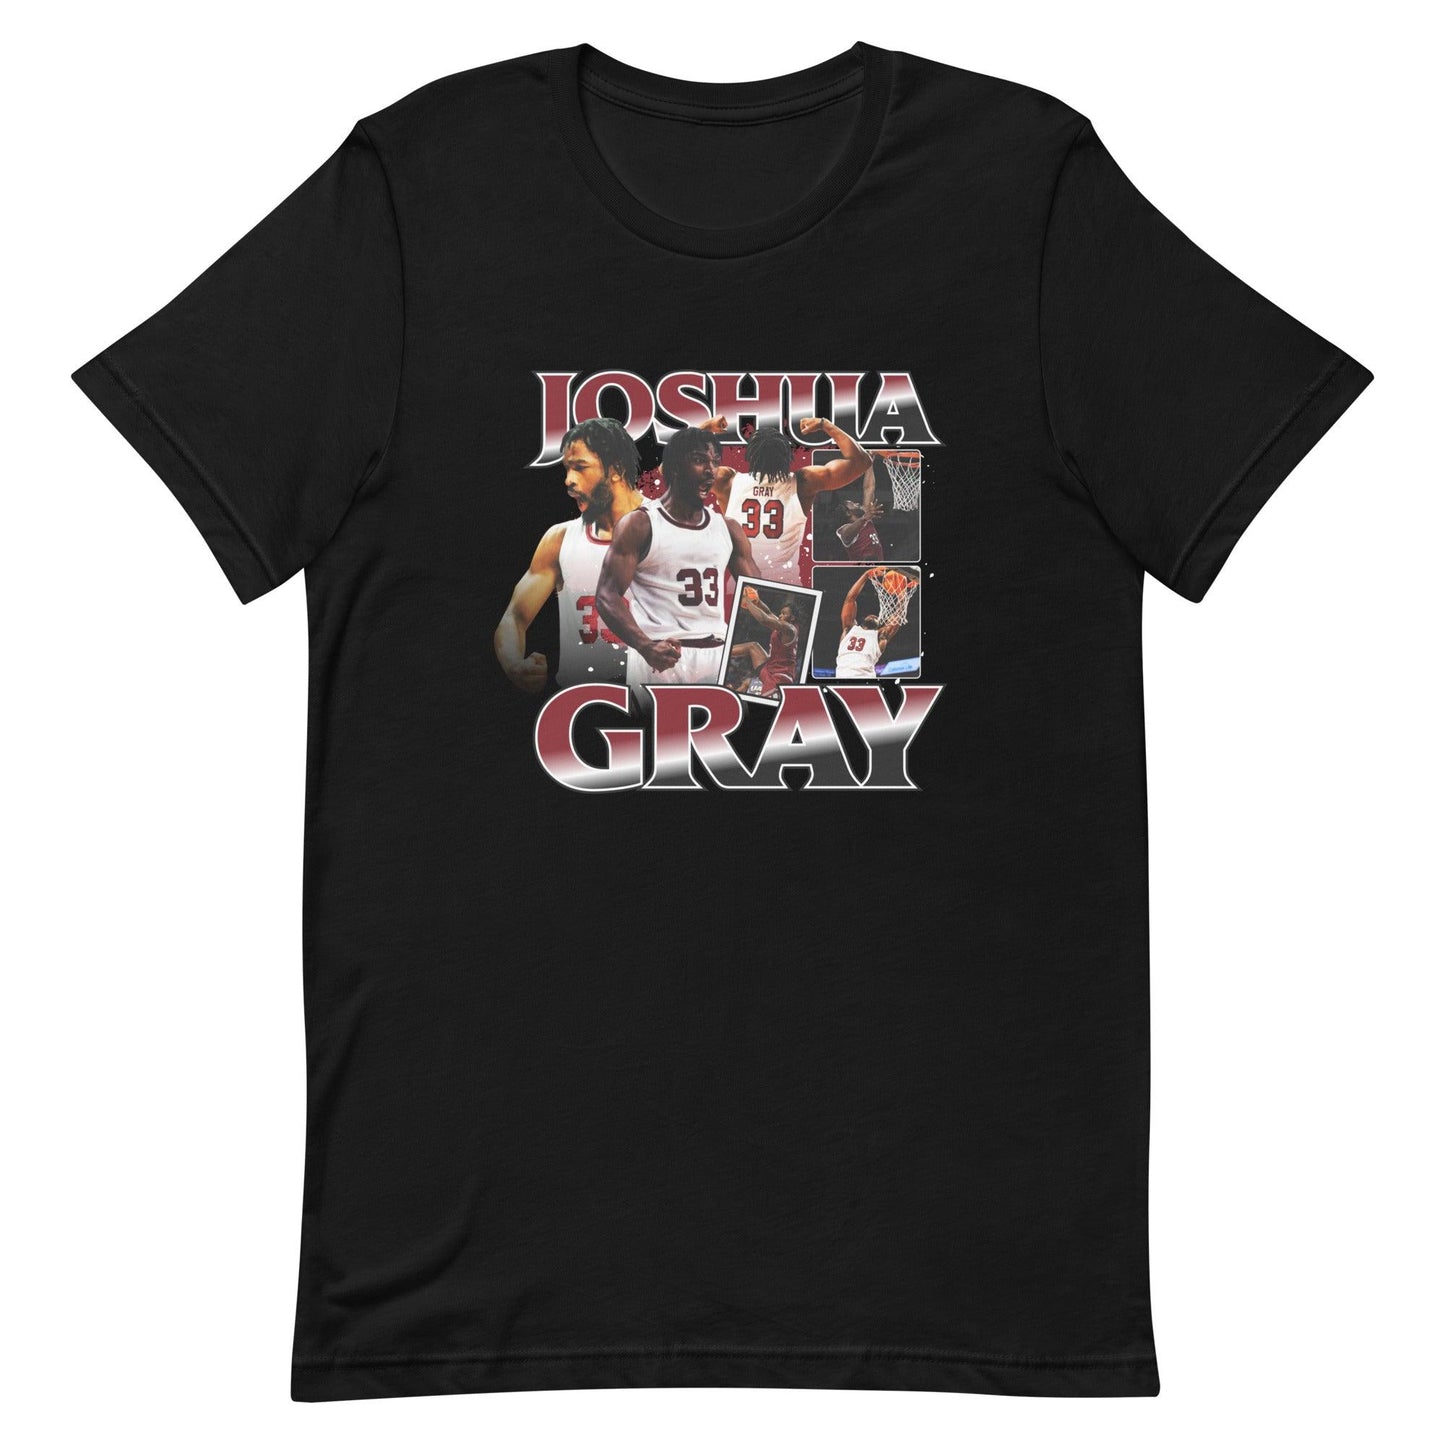 Joshua Gray "Vintage" t-shirt - Fan Arch